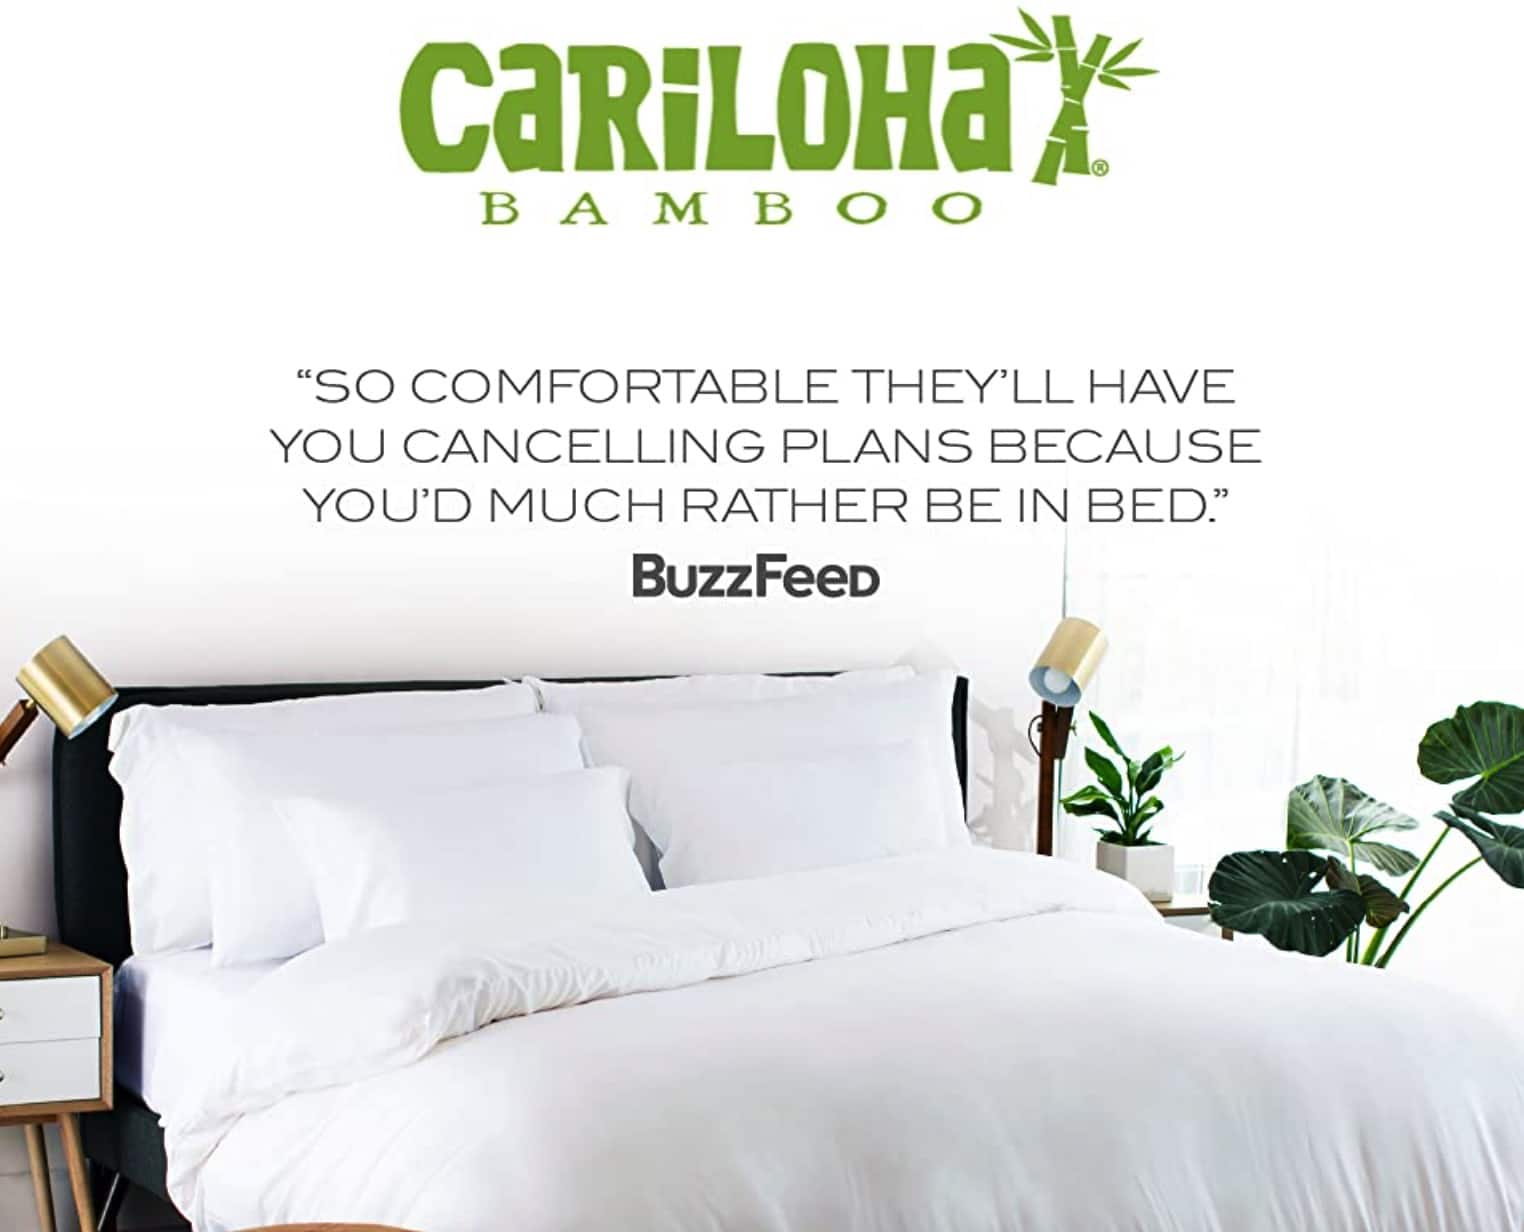 Cariloha bamboo sheets